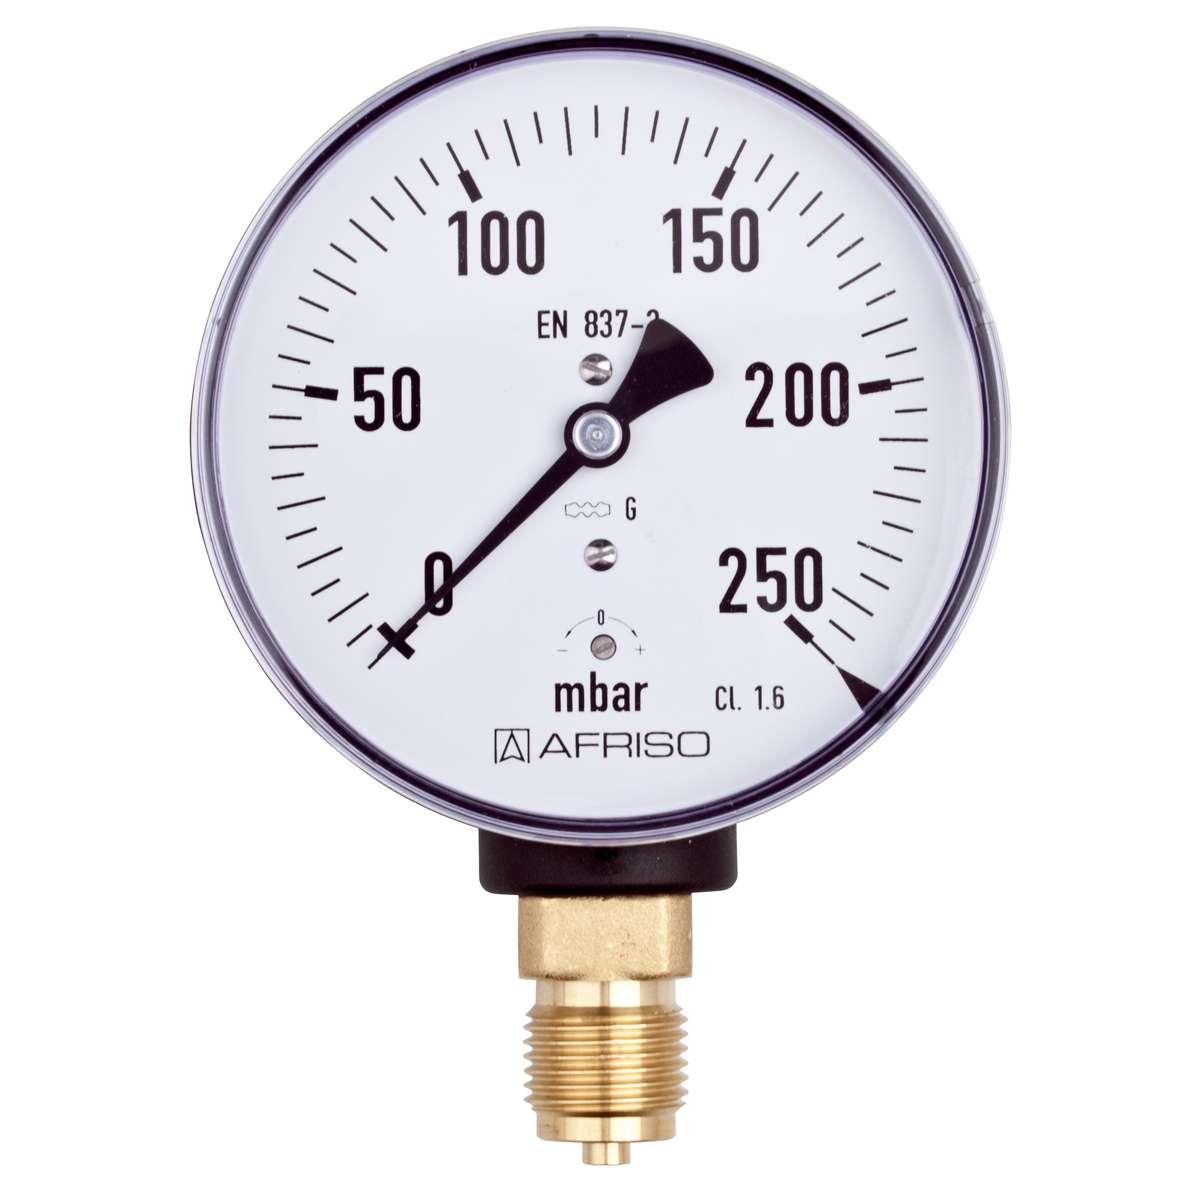 Manometr KP 100 pro plynná média, Ø 100 mm, 0 ÷ 60 mbar, G½", radiální, typ D2 - AFRISO.CZ